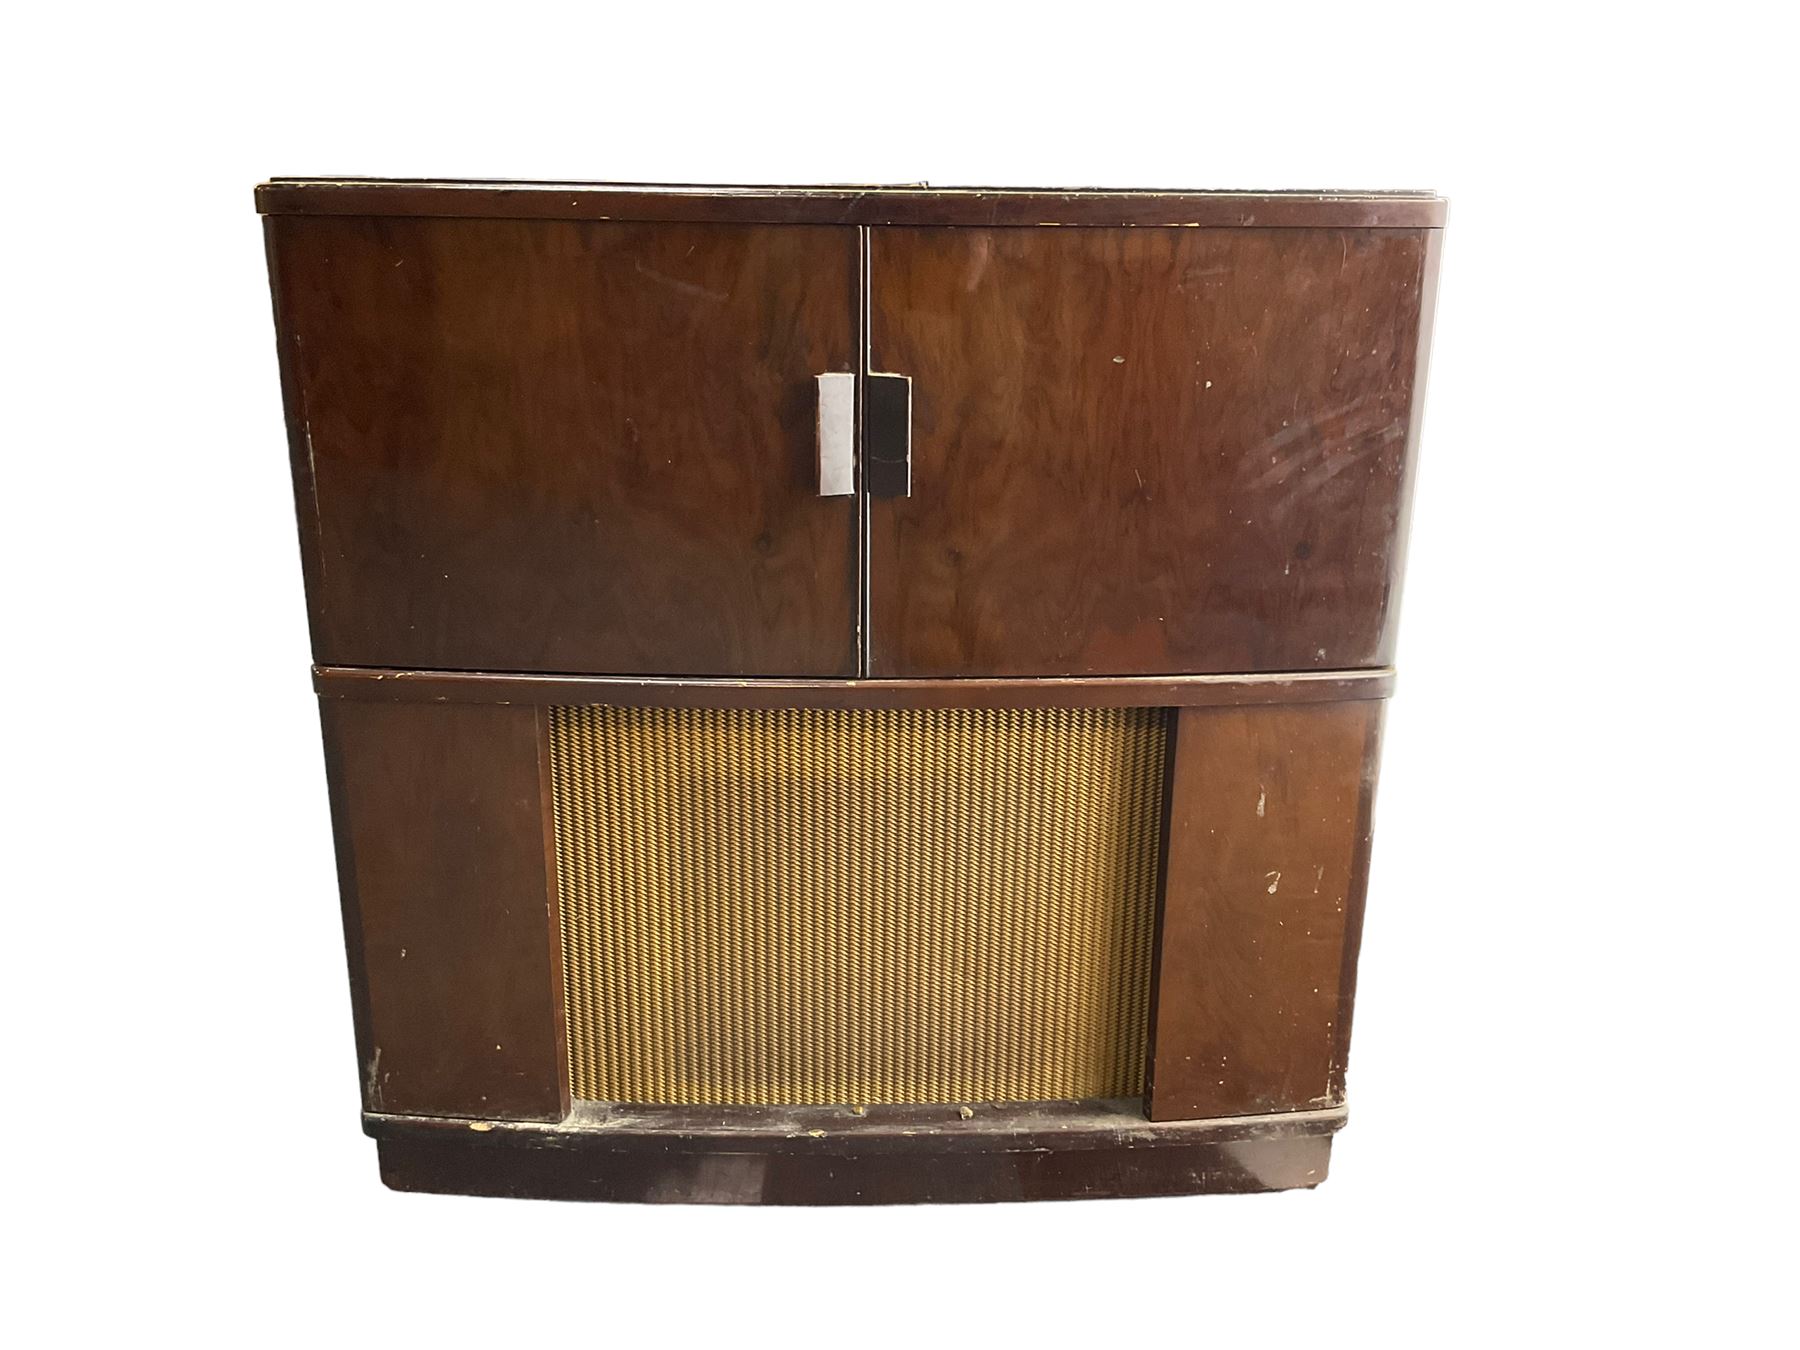 Philips gramophone cabinet (W90cm